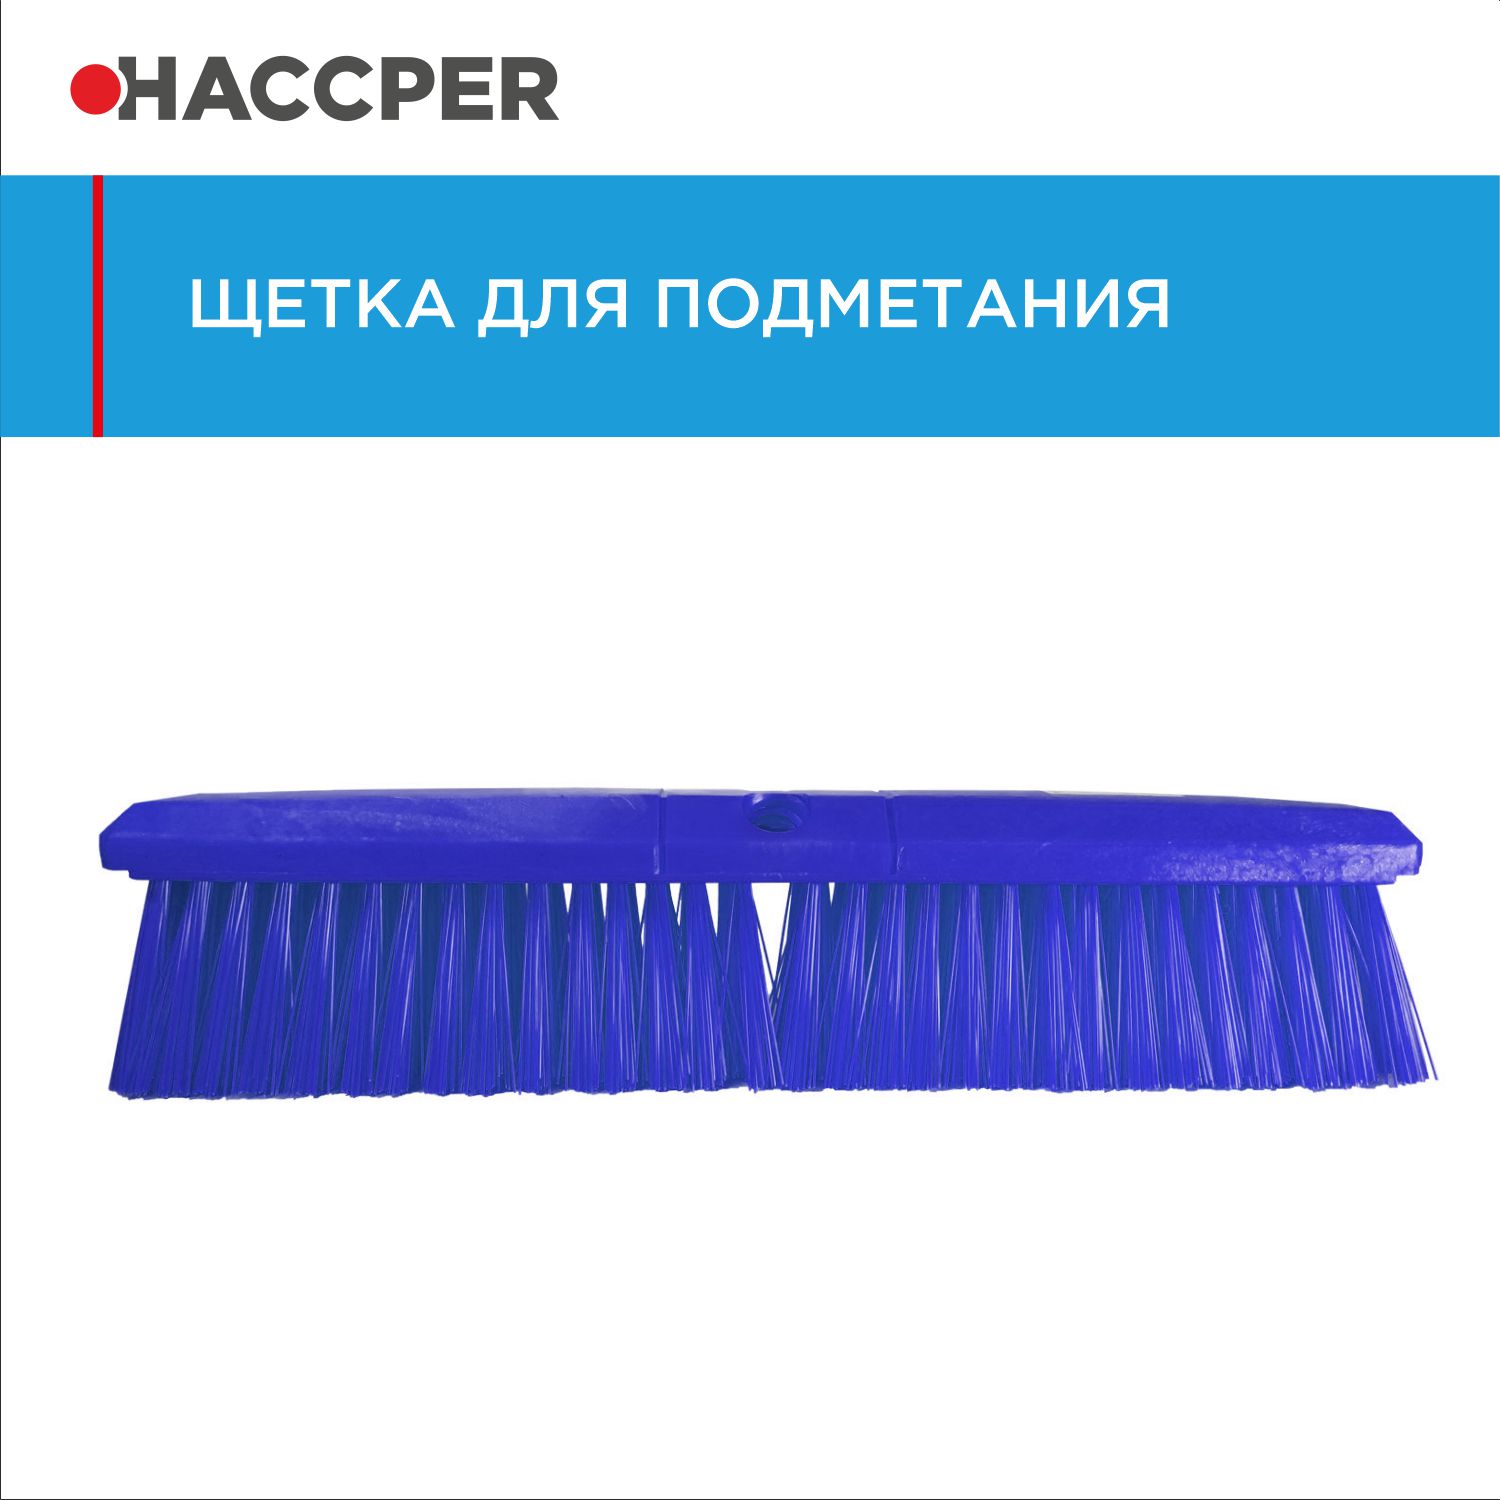 Щетка HACCPER для подметания, средней жесткости, 455 мм, синяя